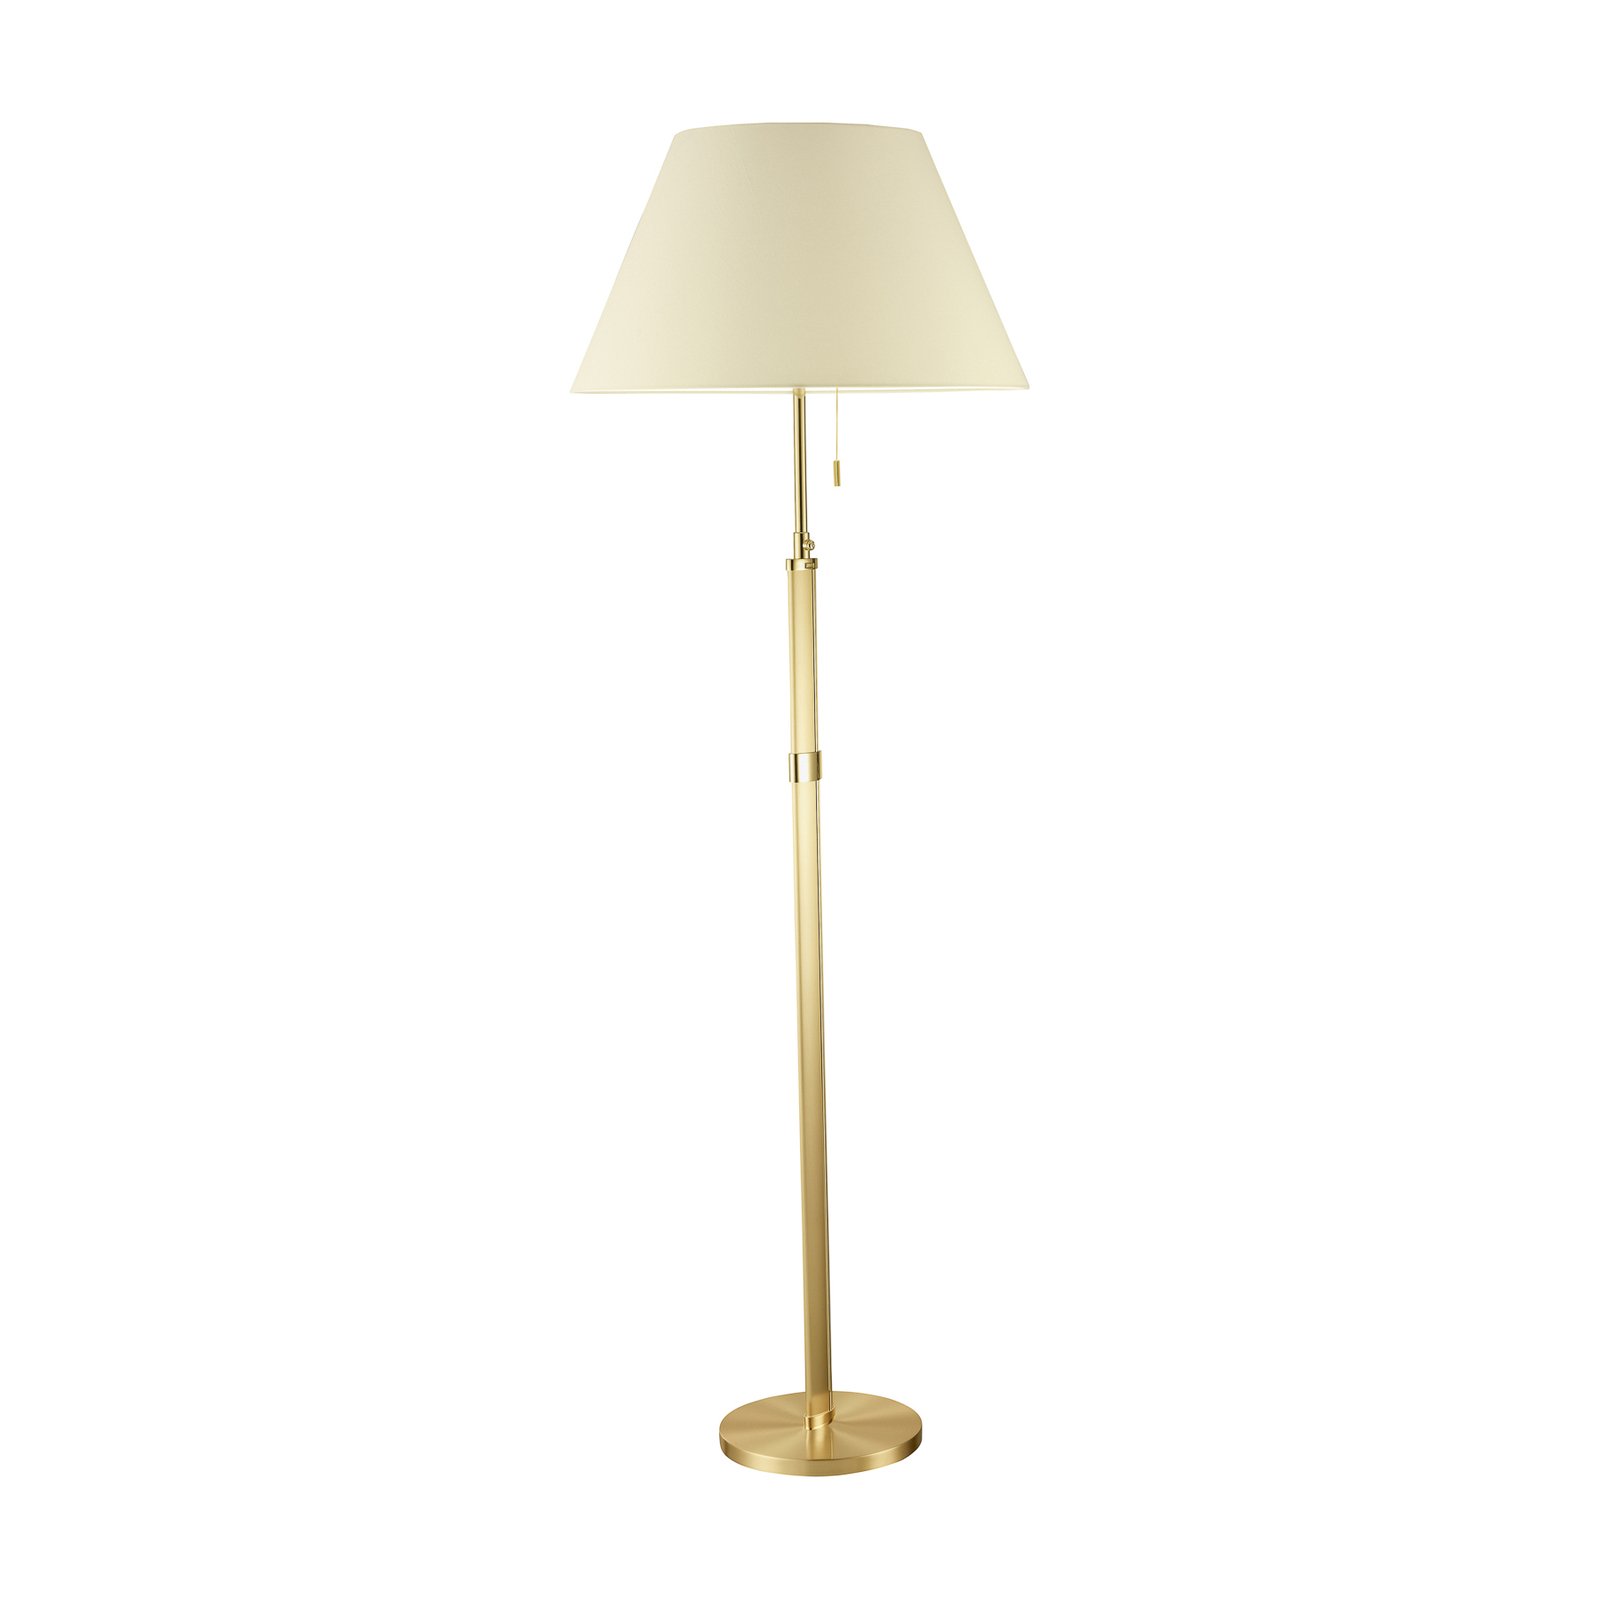 B+M LEUCHTEN Seda floor lamp, height 155 cm